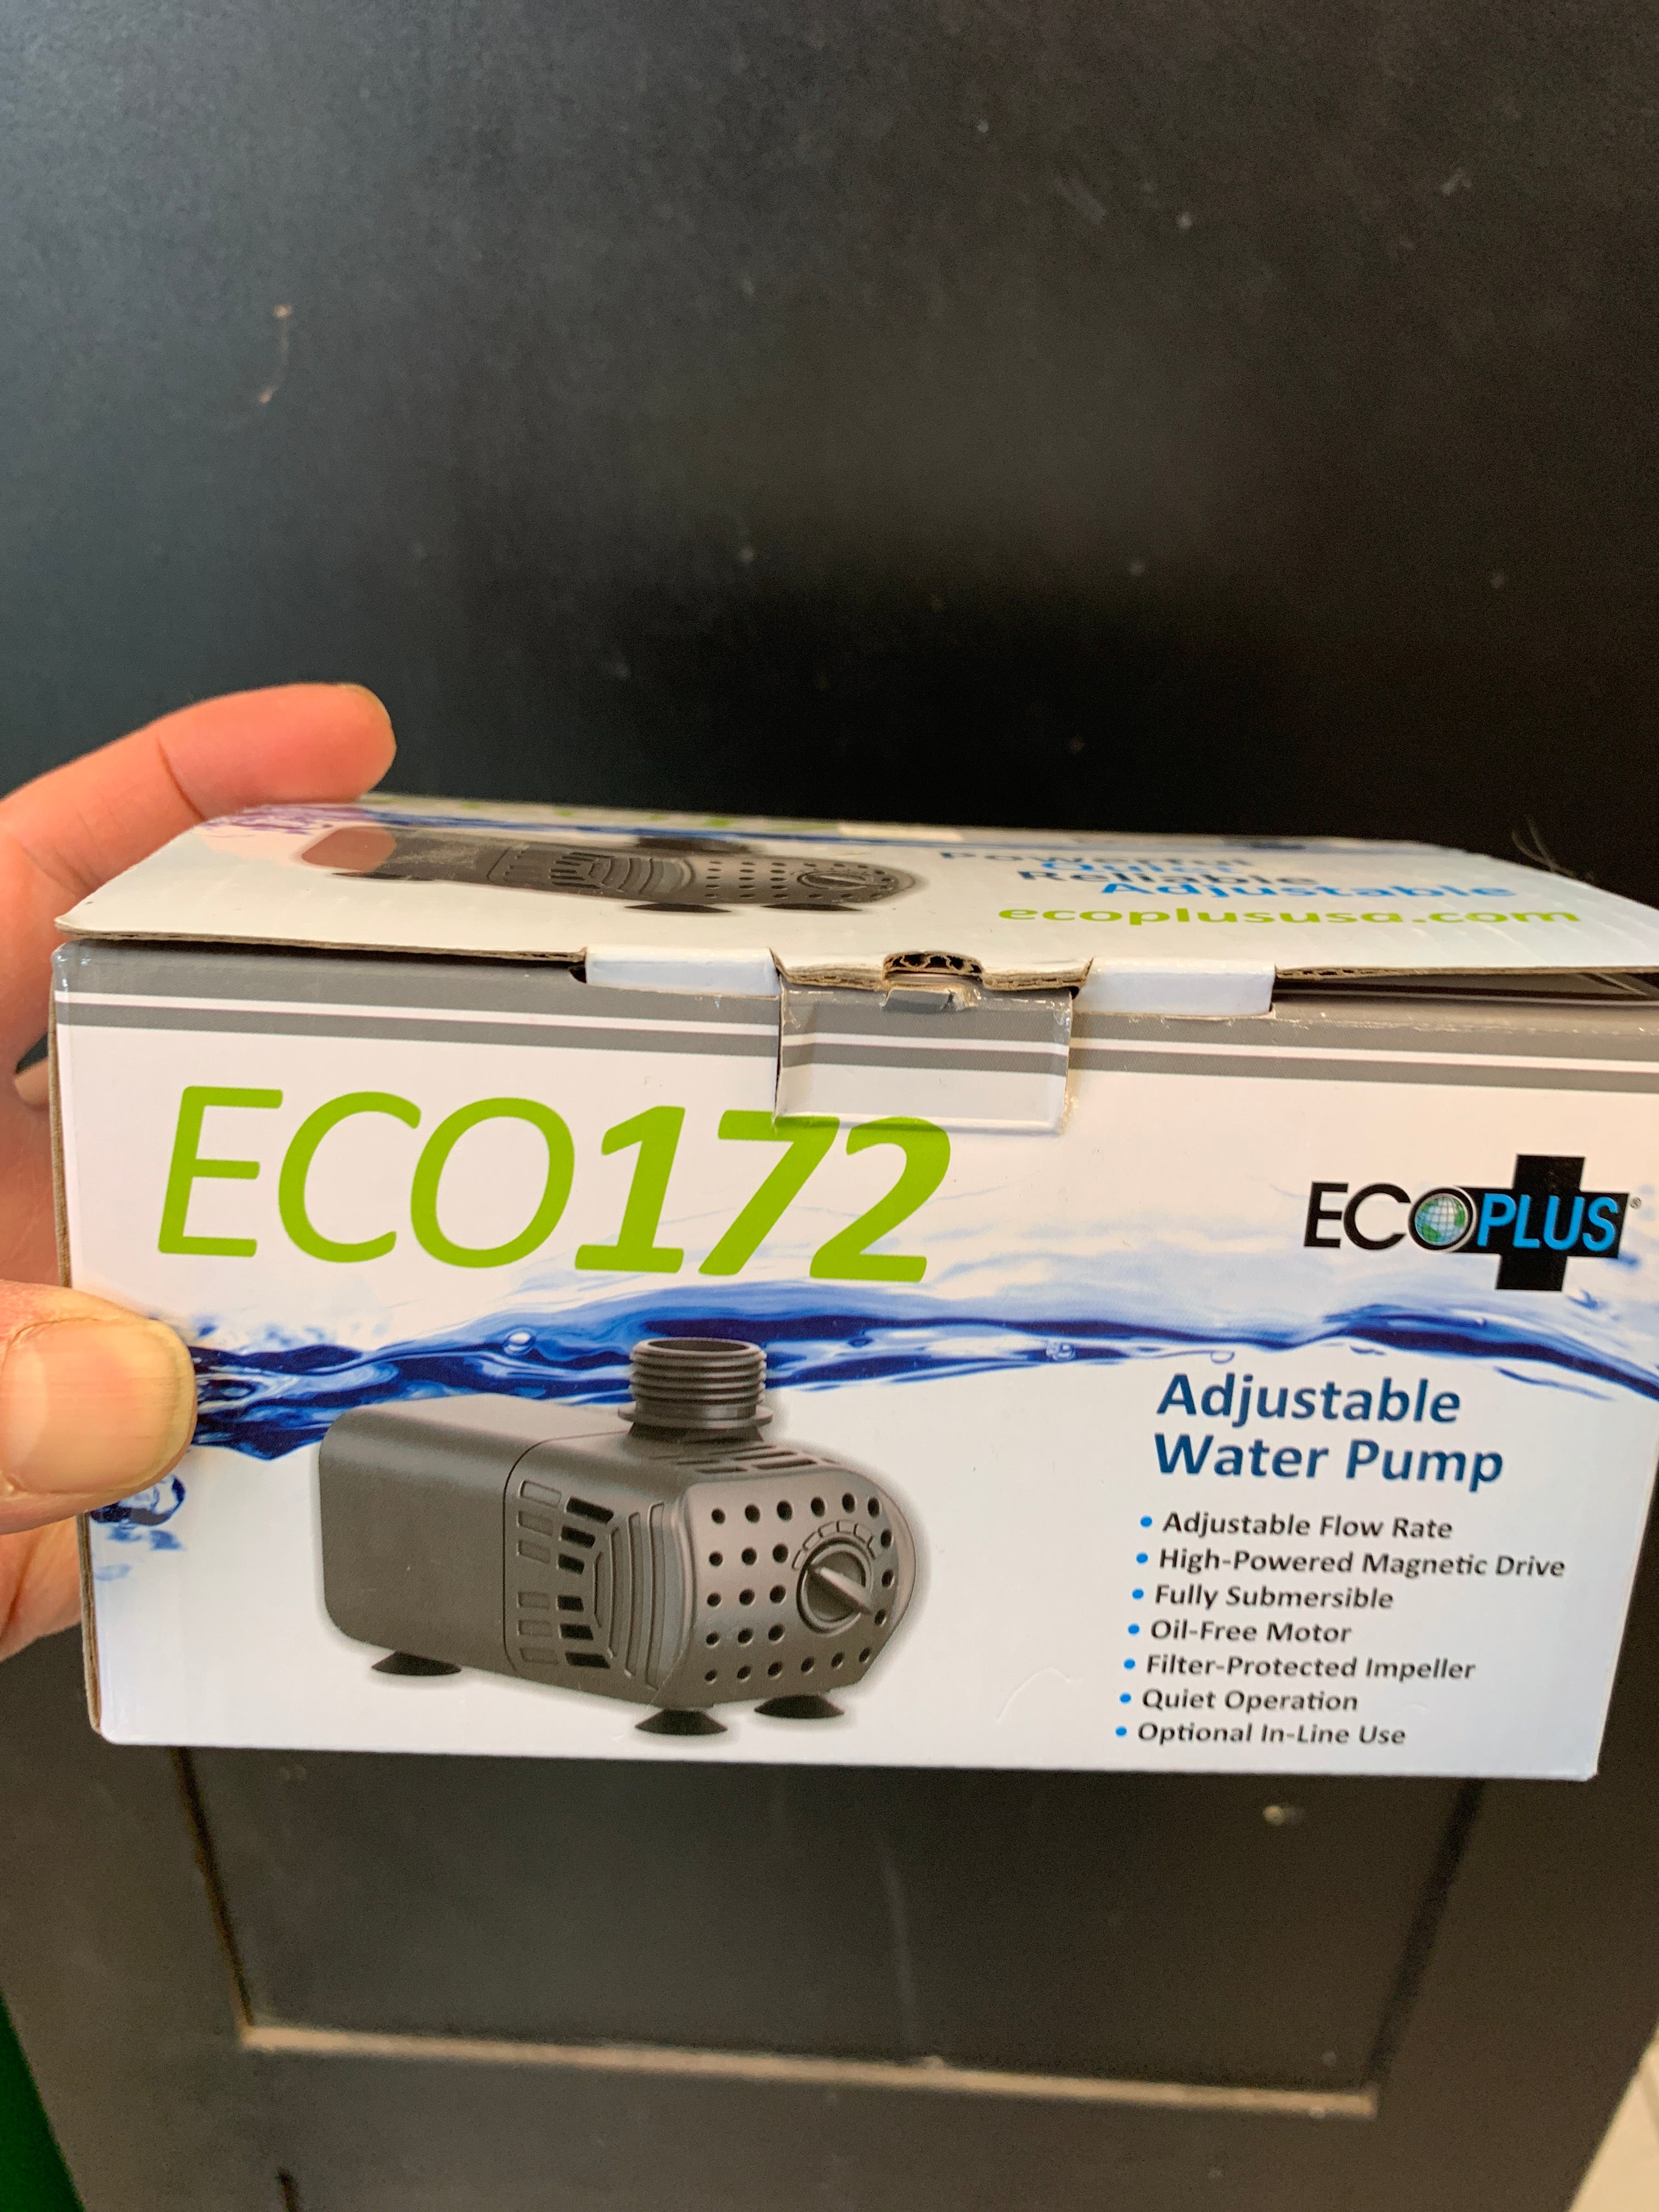 Eco172 water pump